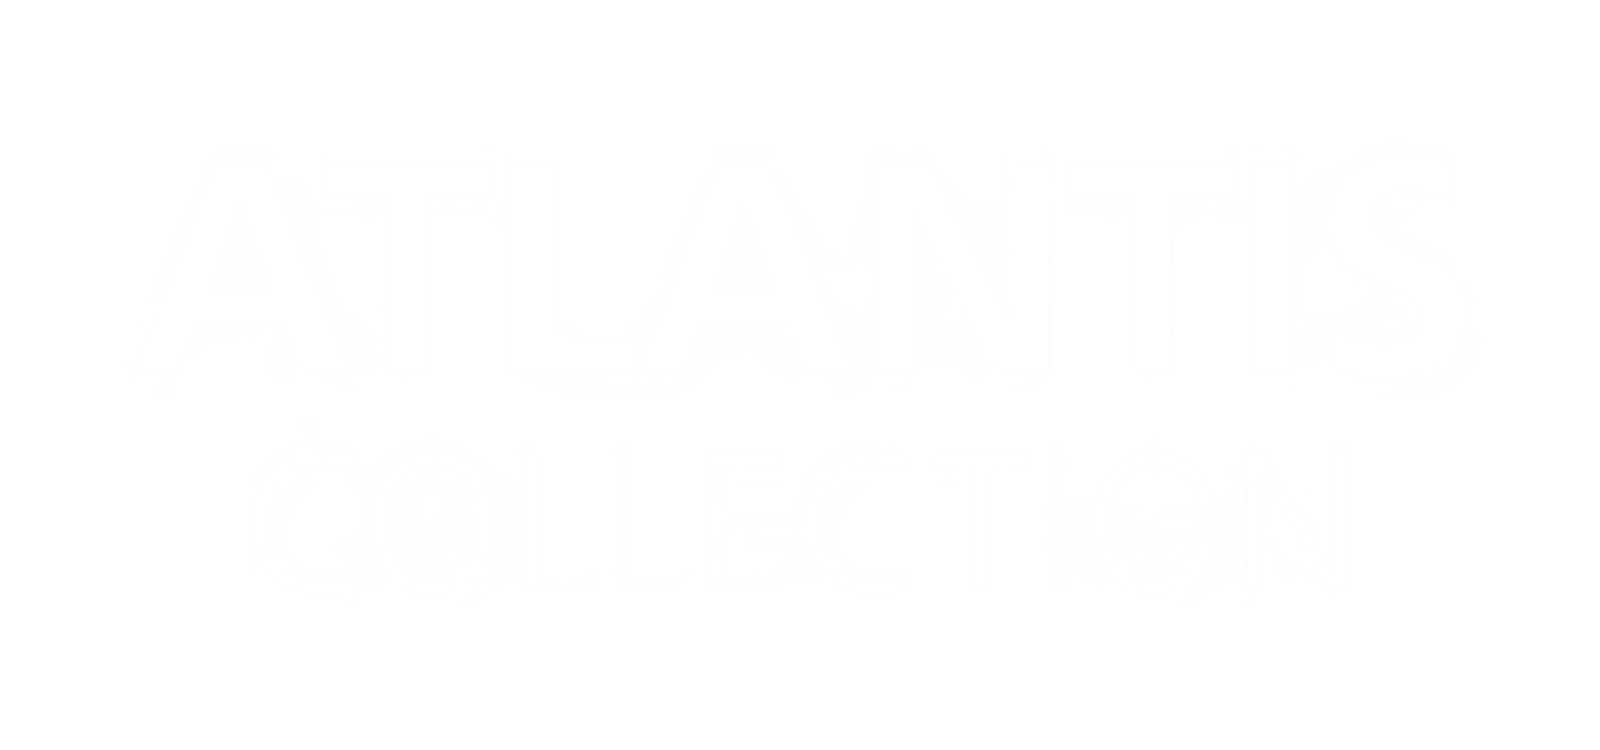 Azimut Yachts Atlantis Collection logo